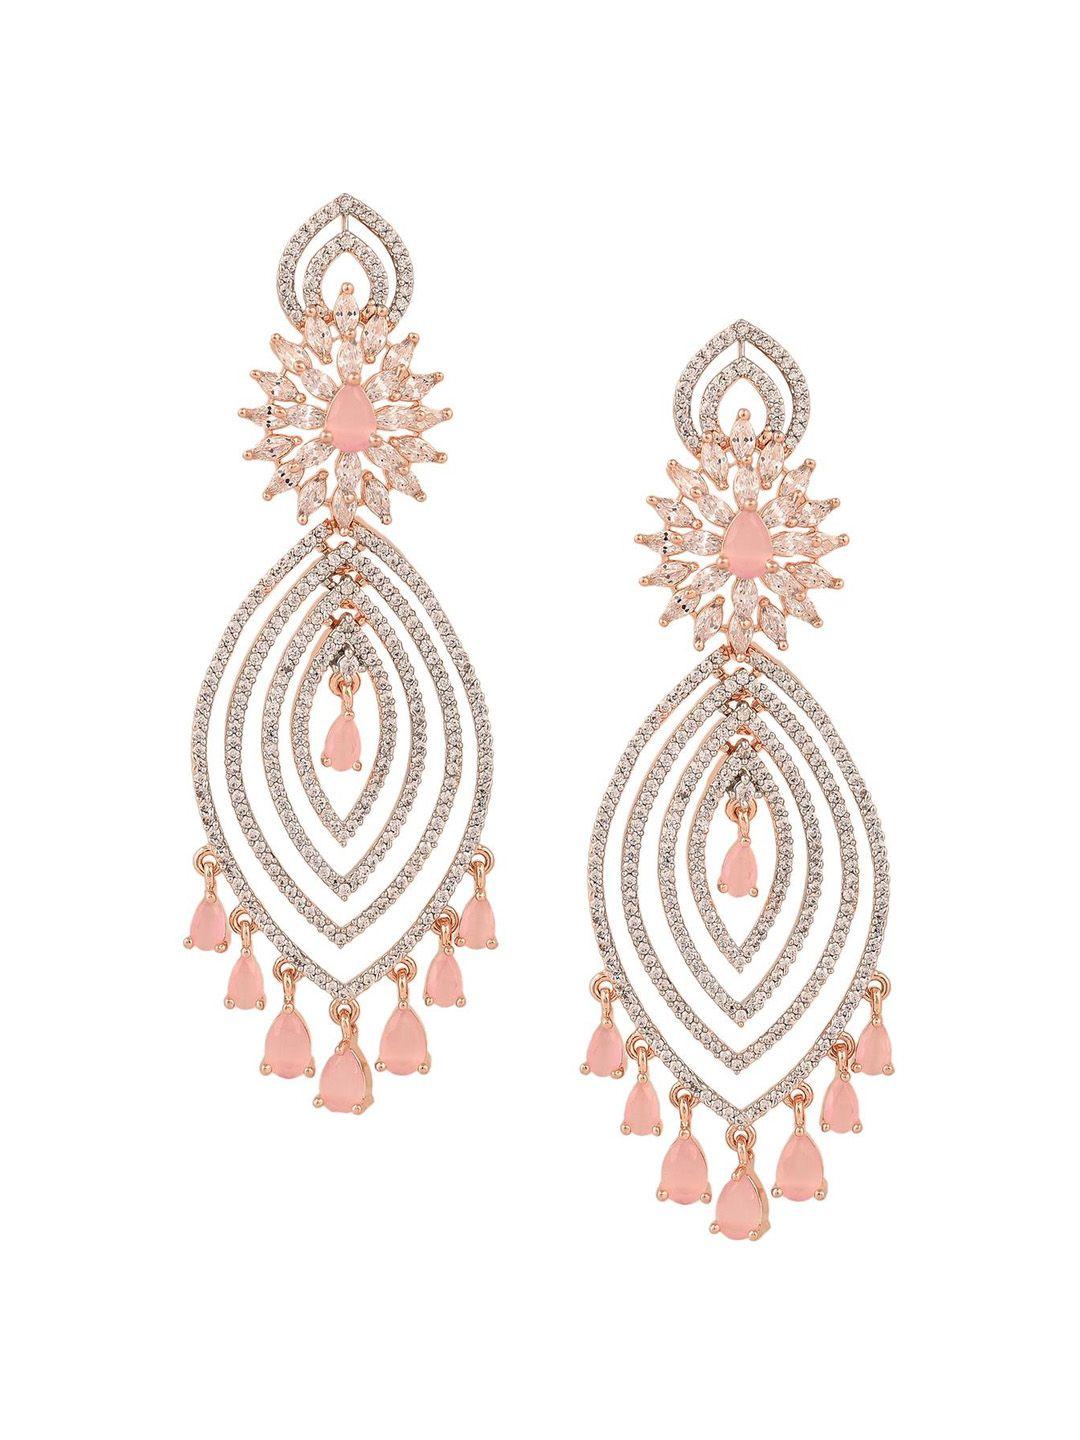 ratnavali jewels rose gold-plated classic drop earrings